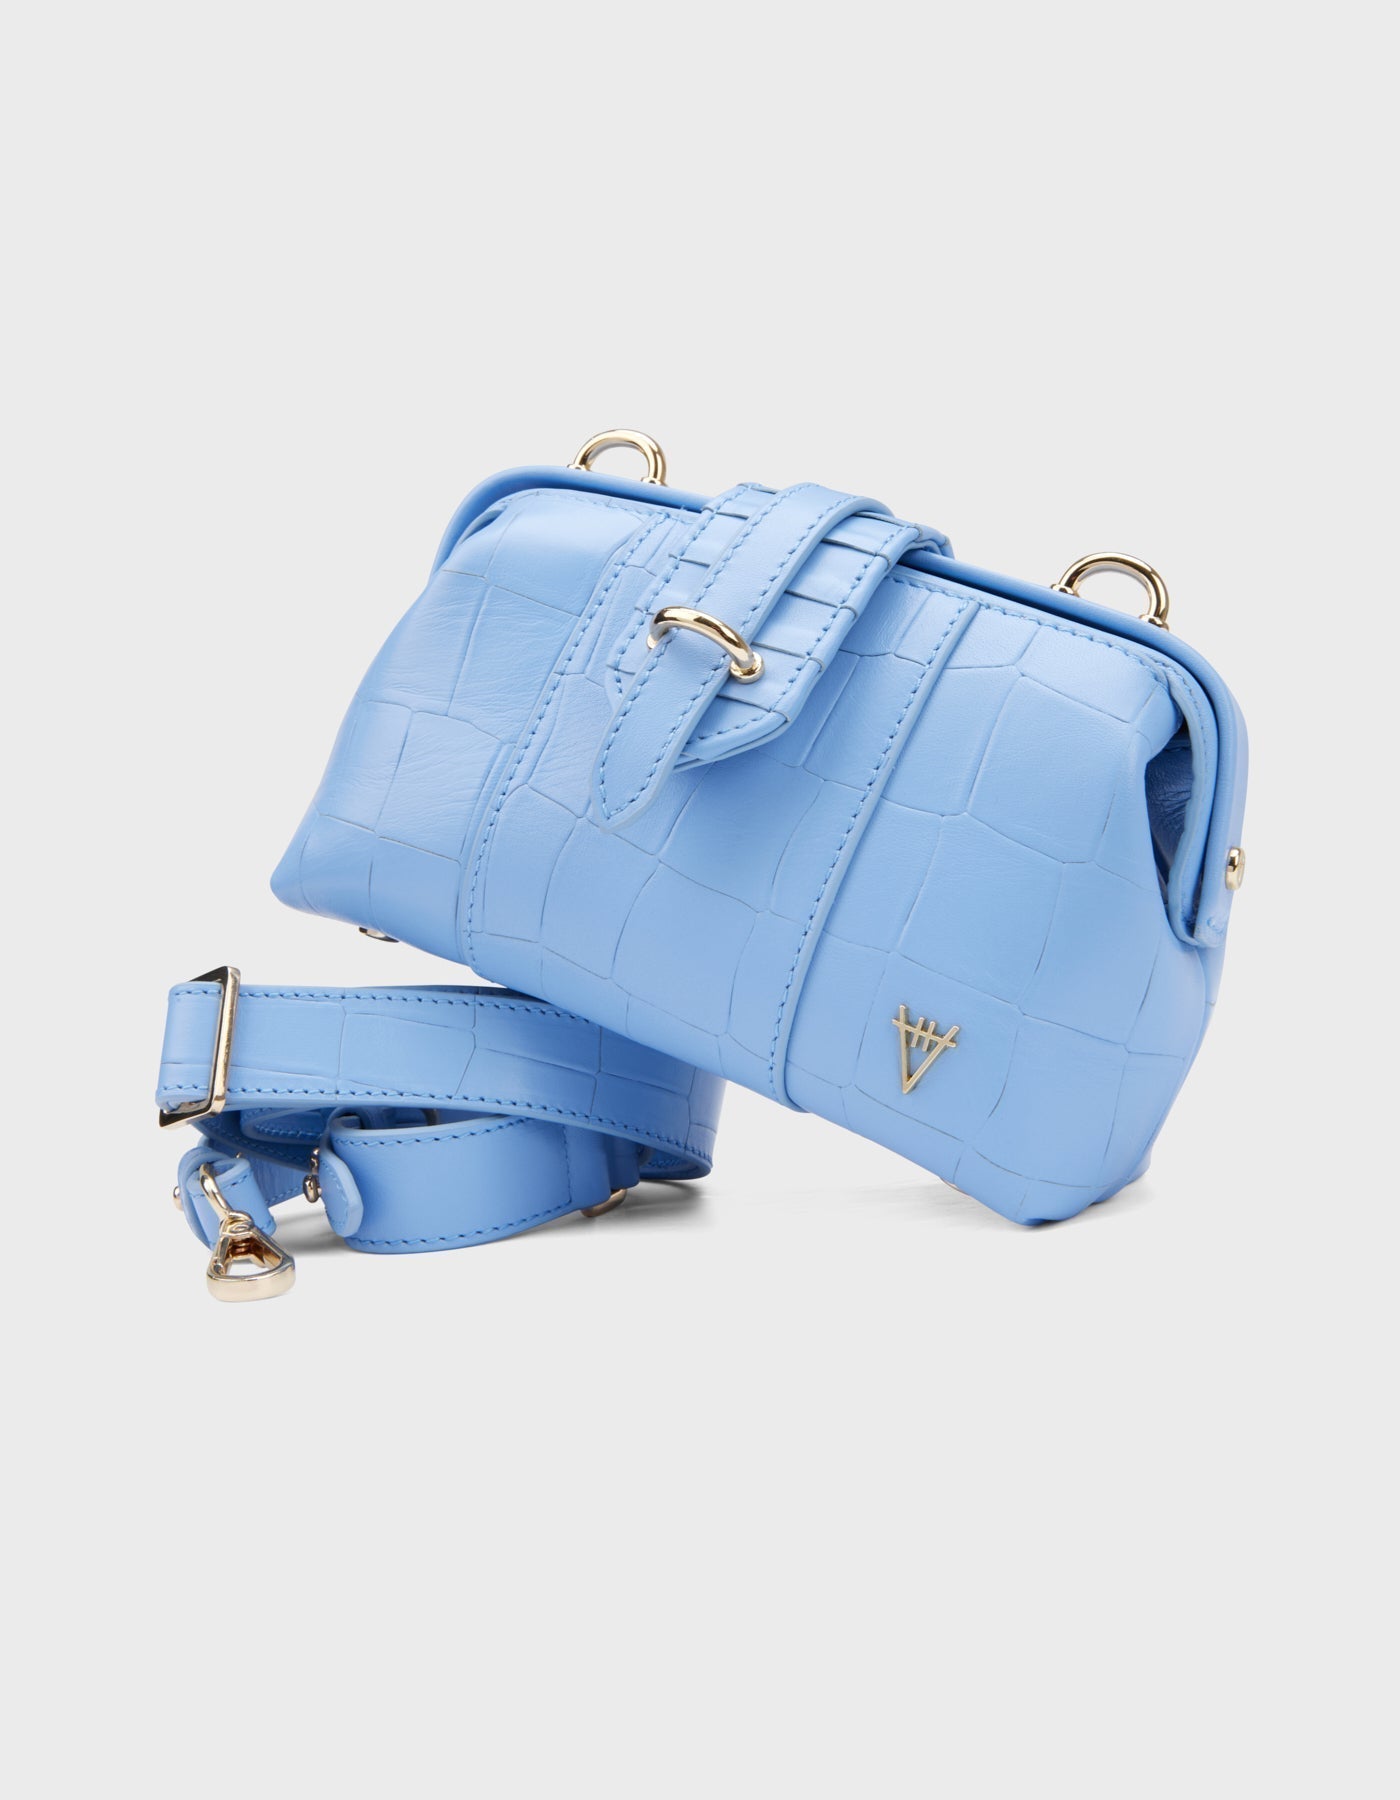 HiVa Atelier | Mini Nubes Doctor Bag Tranquil Blue | Beautiful and Versatile